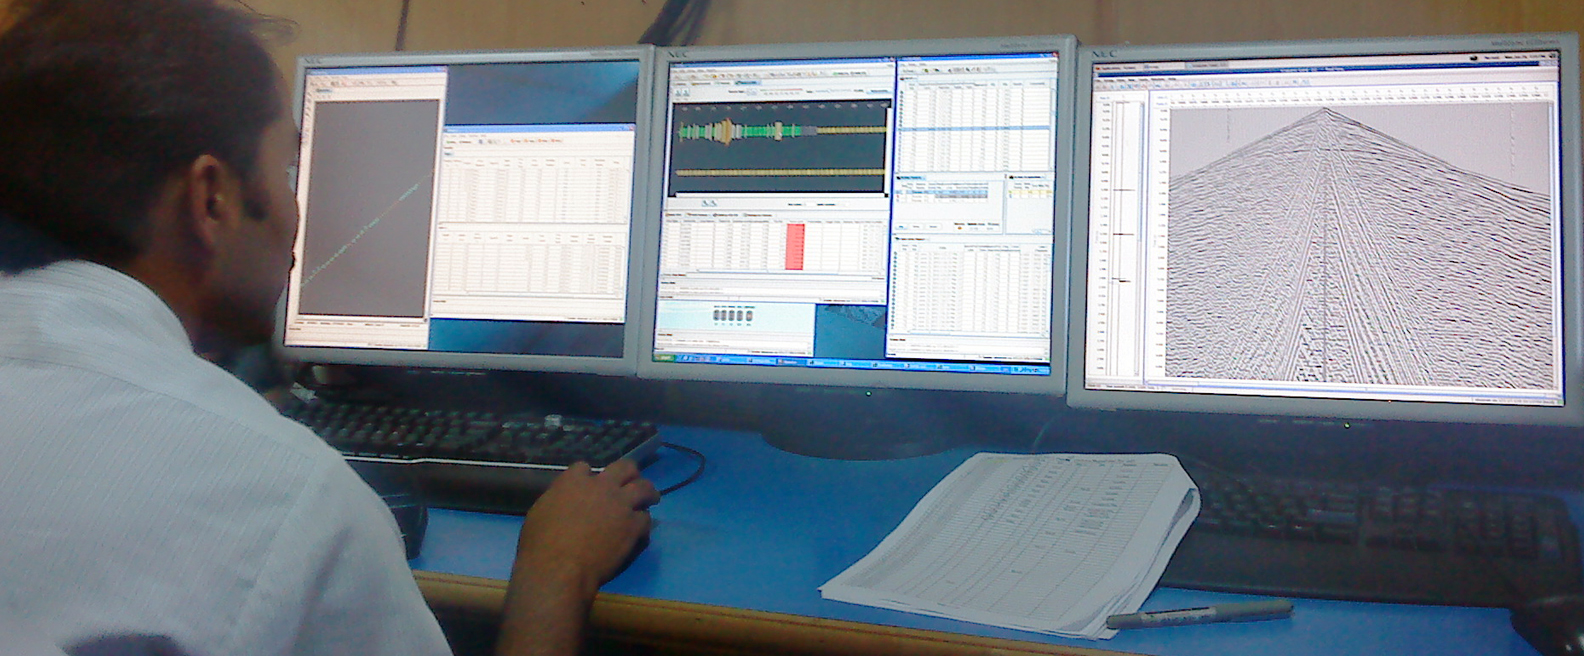 Data recording in progress for Karsal Block Punjab